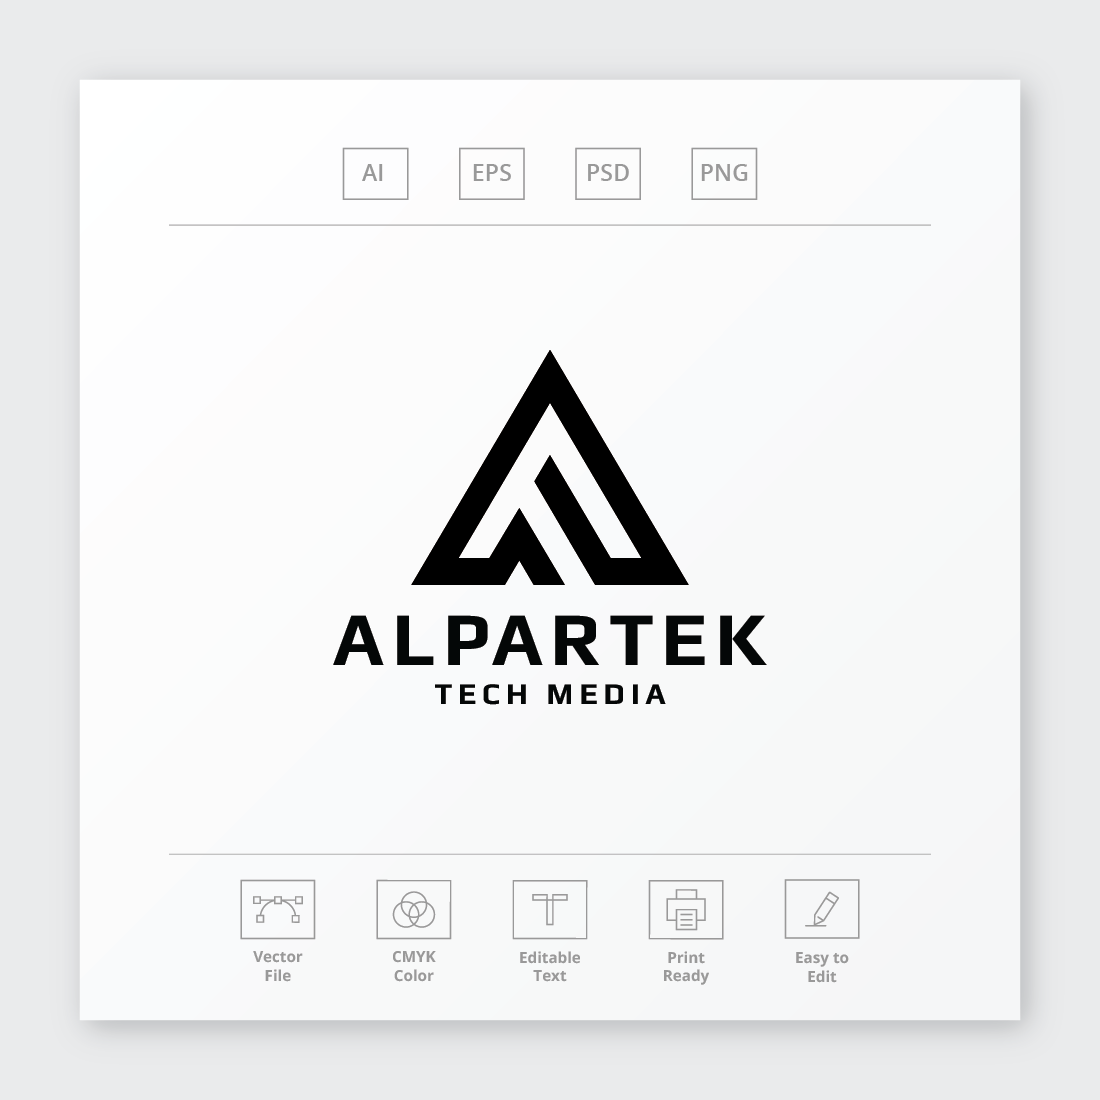 Alpartek Letter A Logo cover image.